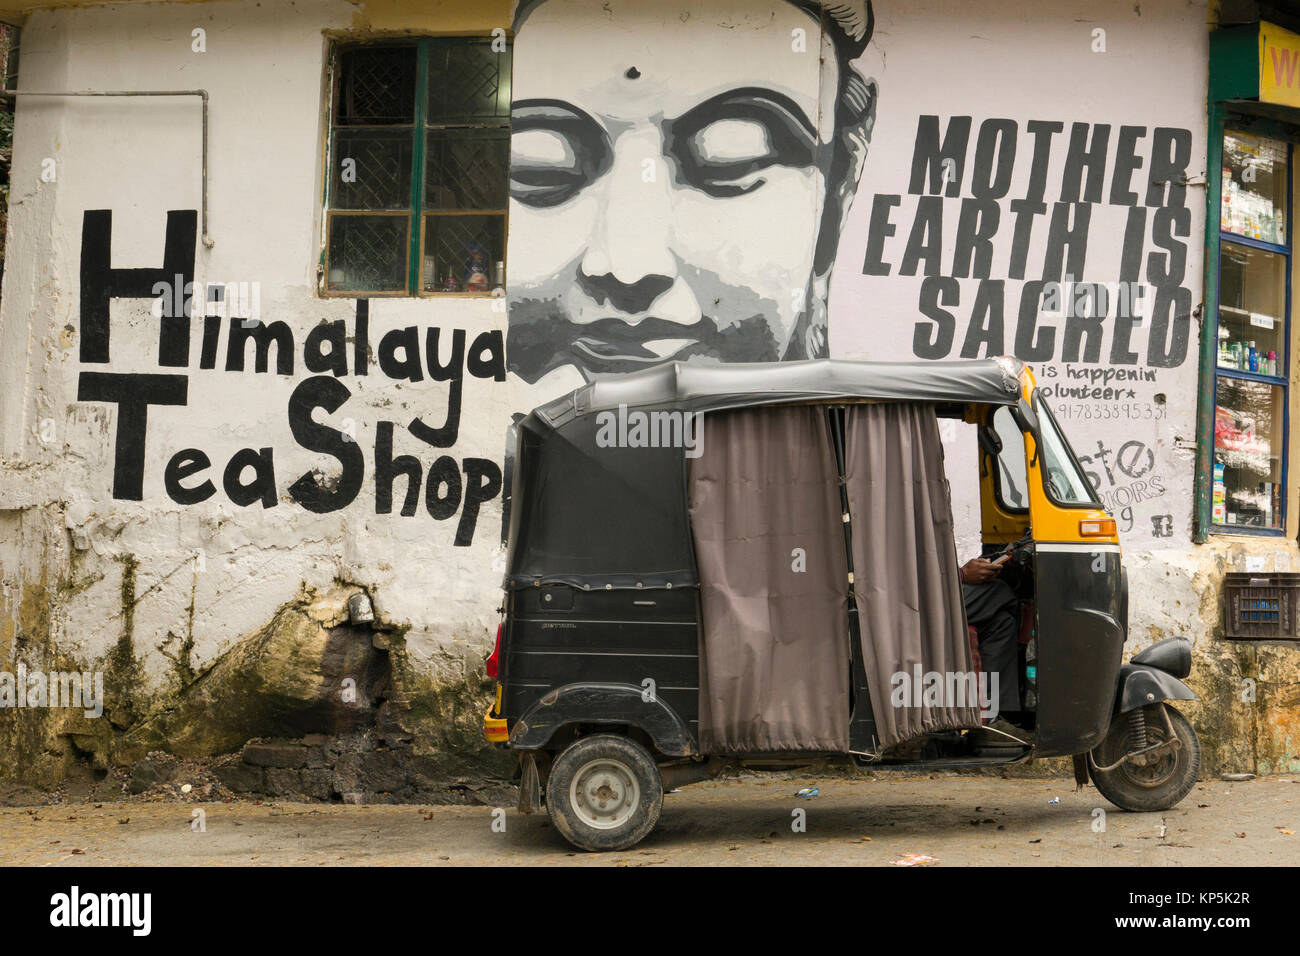 Auto rickshaw parked outside Himalaya tea shop in Dharamkot, India Stock Photo